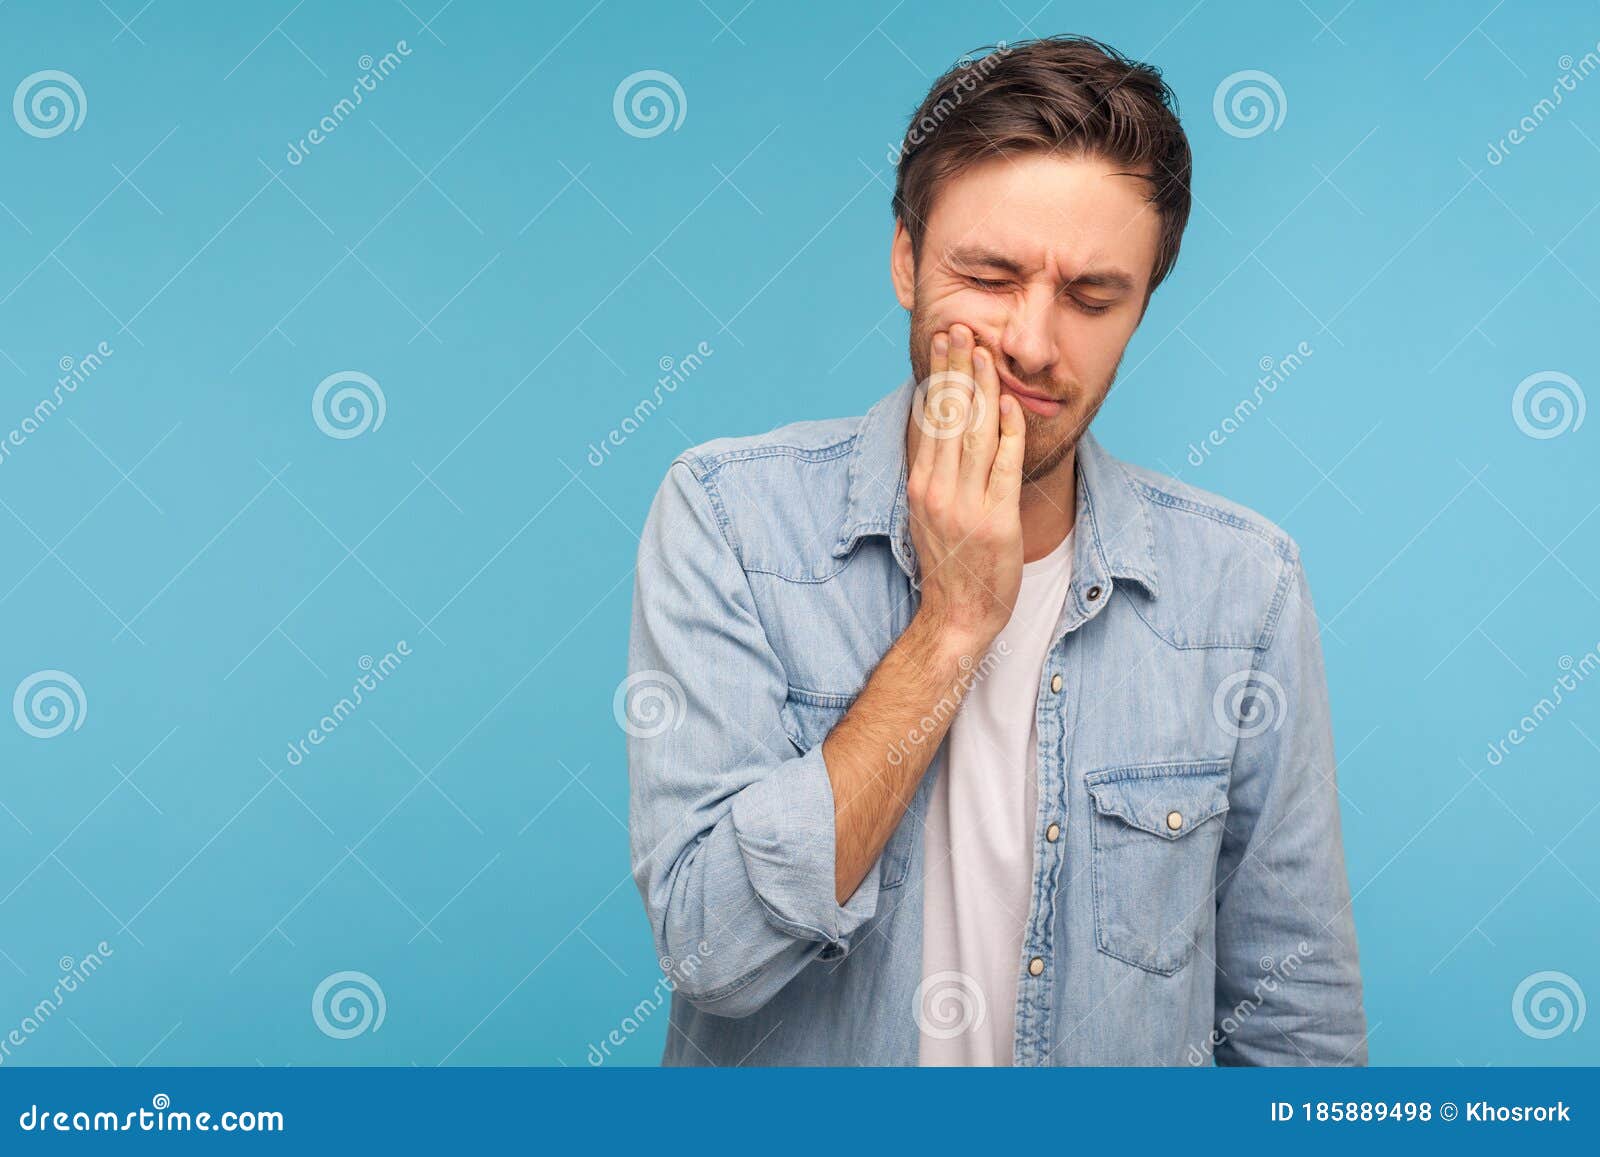 Dental Problems. Portrait of Unhealthy Man in Denim Shirt Pressing Sore ...